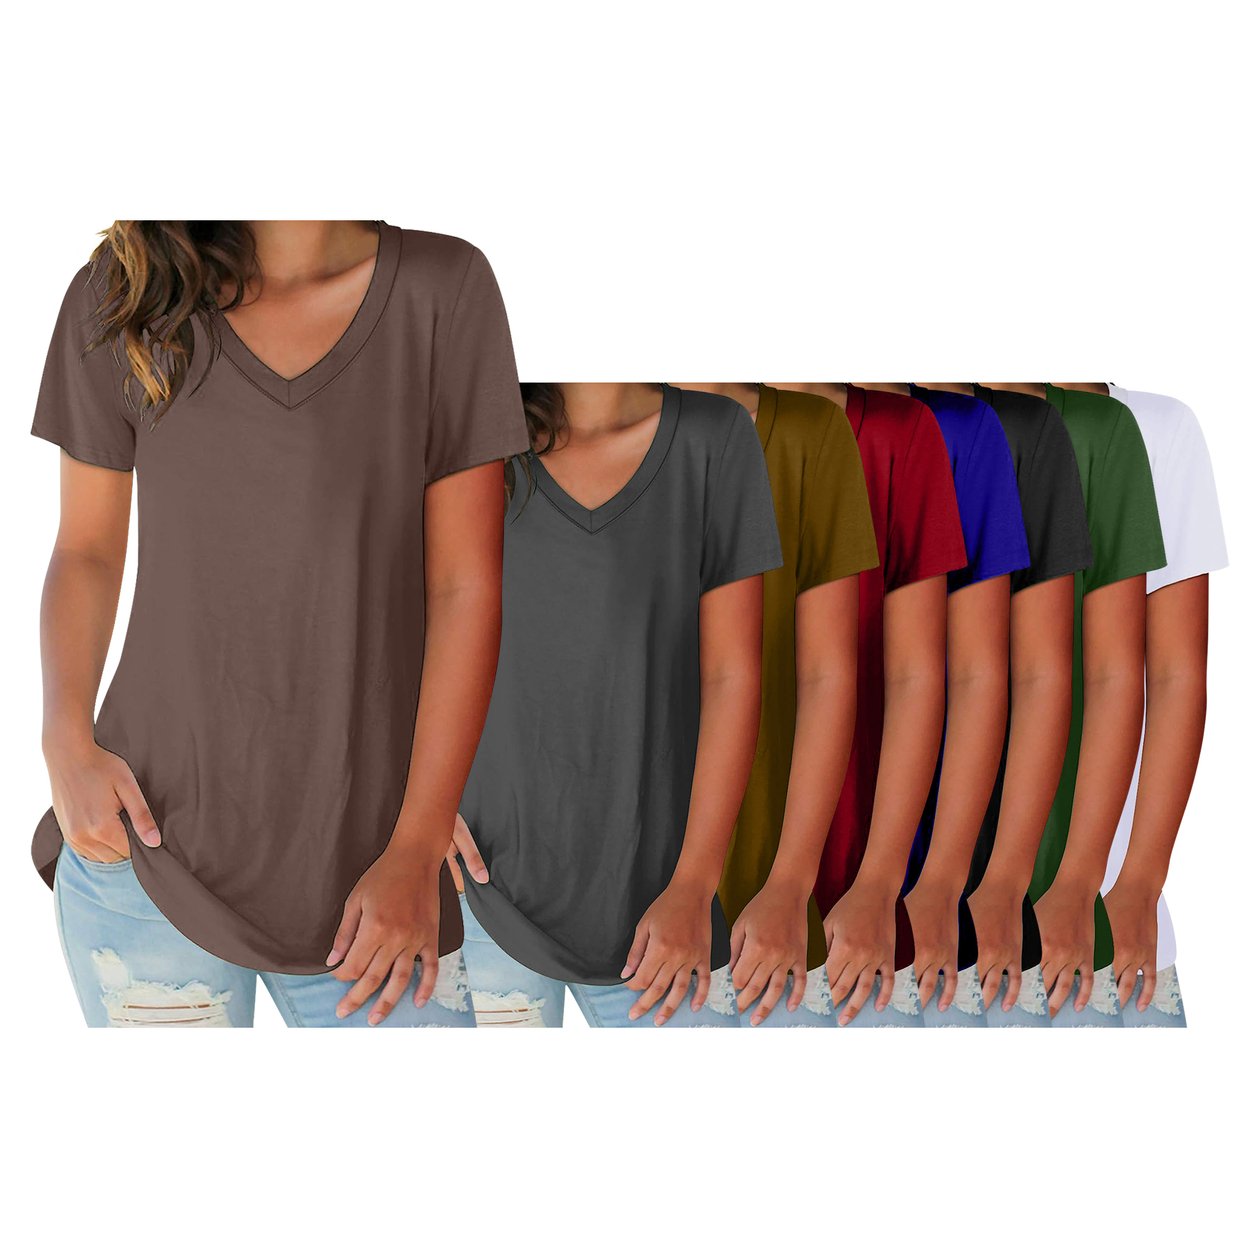 3-Pack: Women's Ultra Soft Smooth Cotton Blend Basic V-Neck Short Sleeve Shirts - Black, Navy Mustard, Xx-large